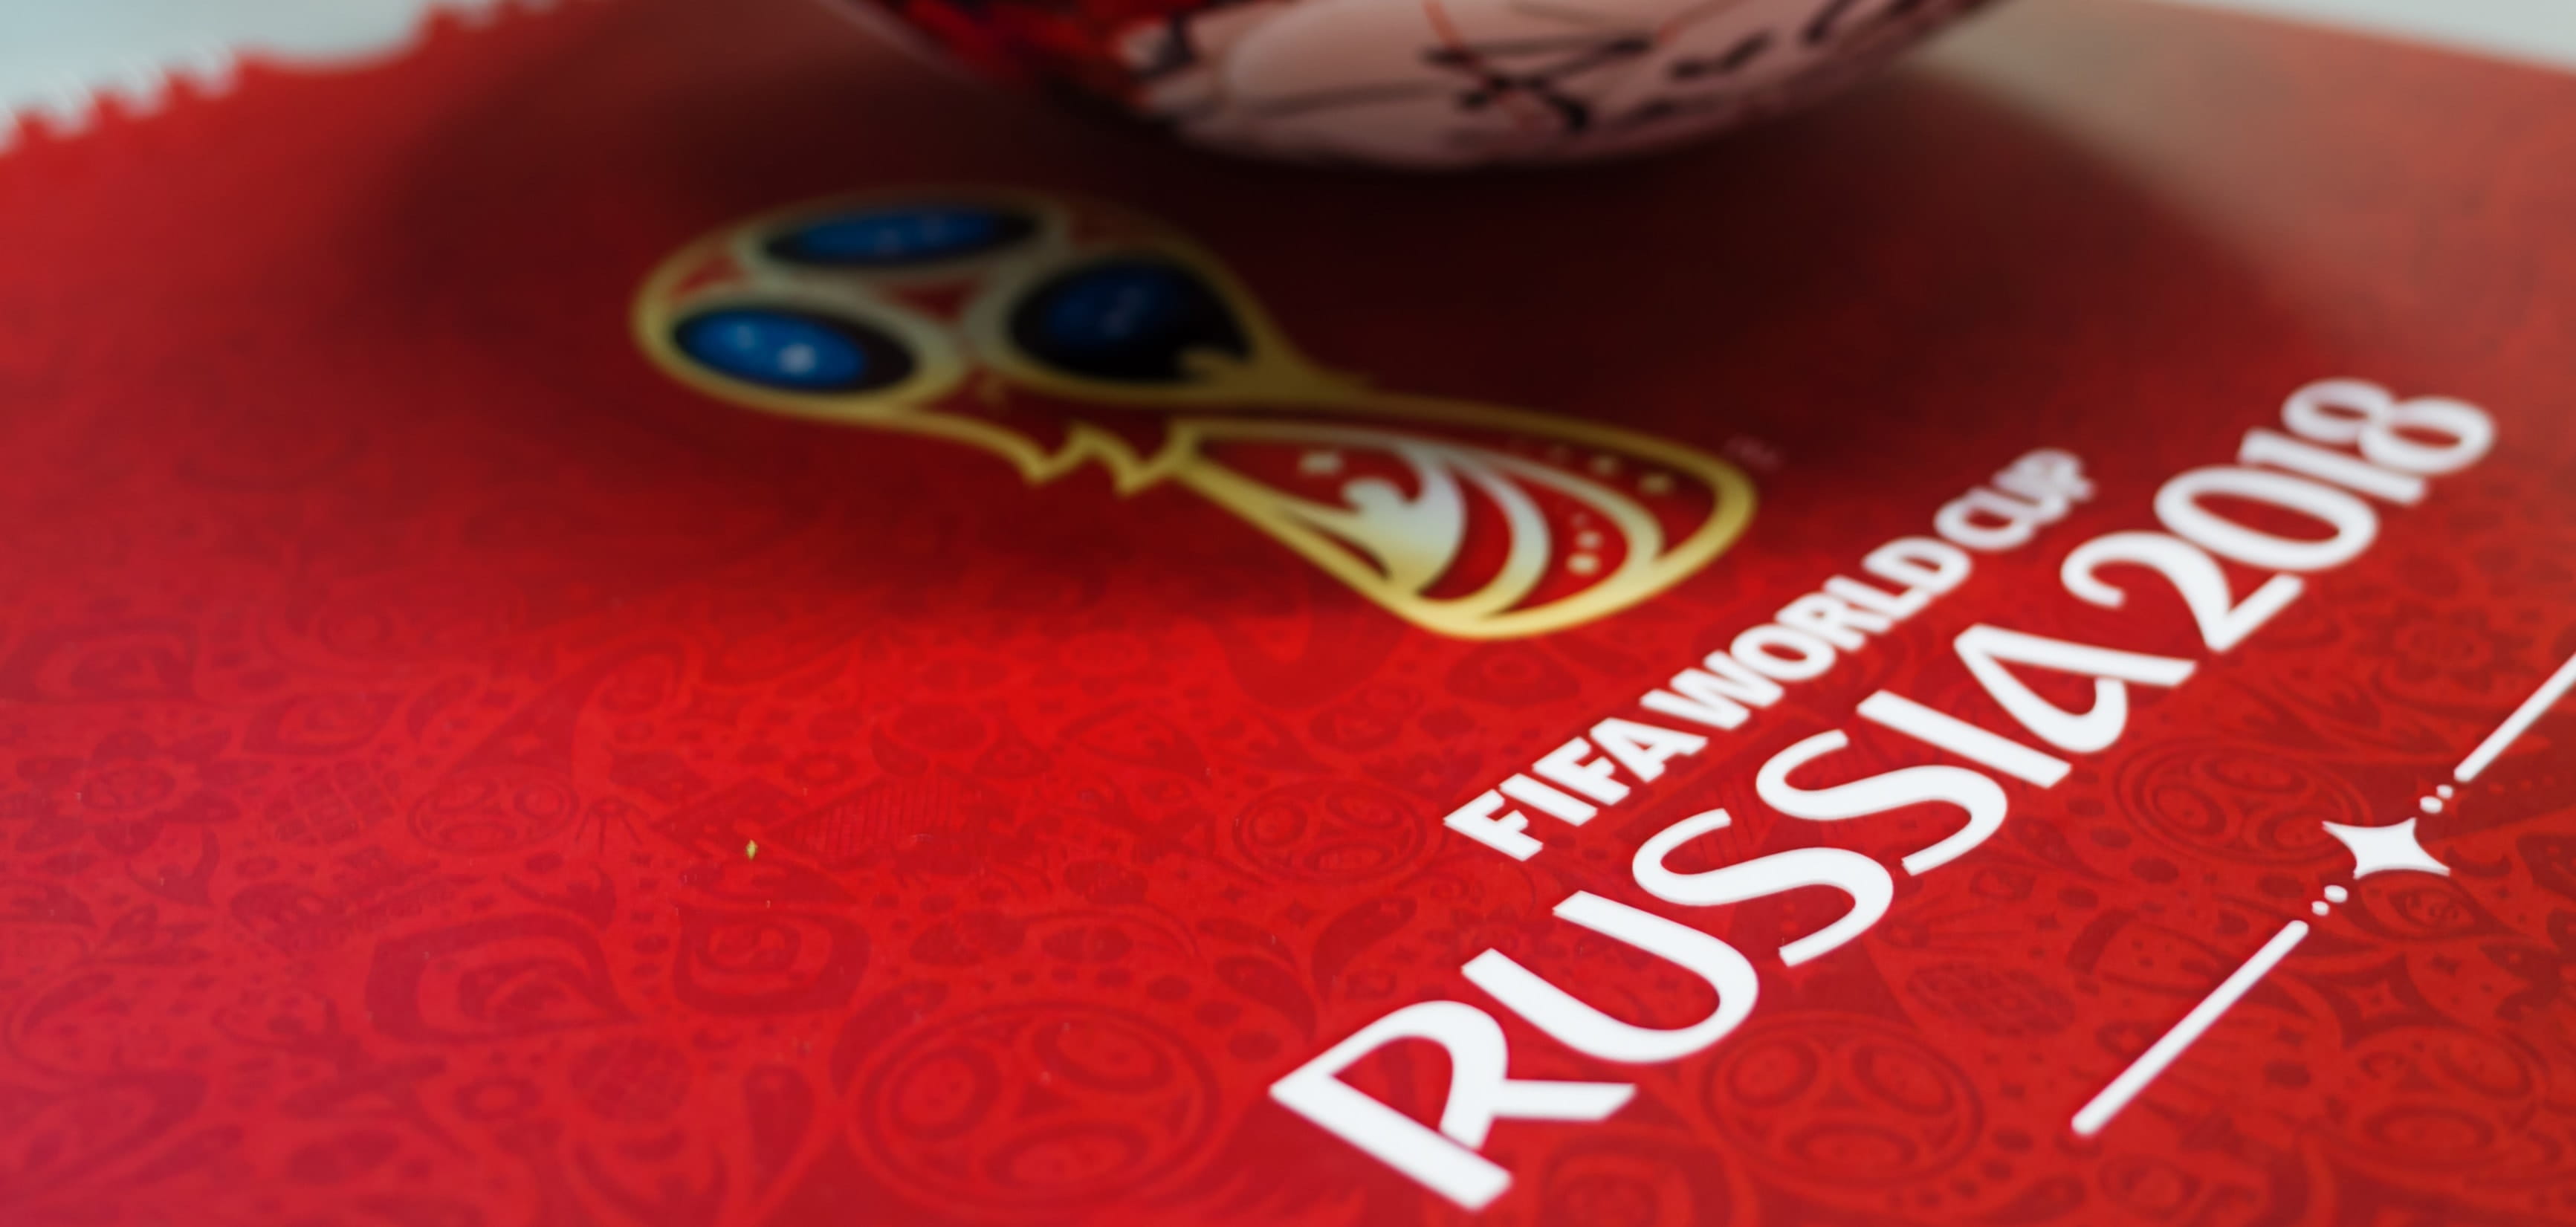 https://economia.icaew.com:443/-/media/economia/images/article-images/footballrussiaworldcup2018-630-min.ashx